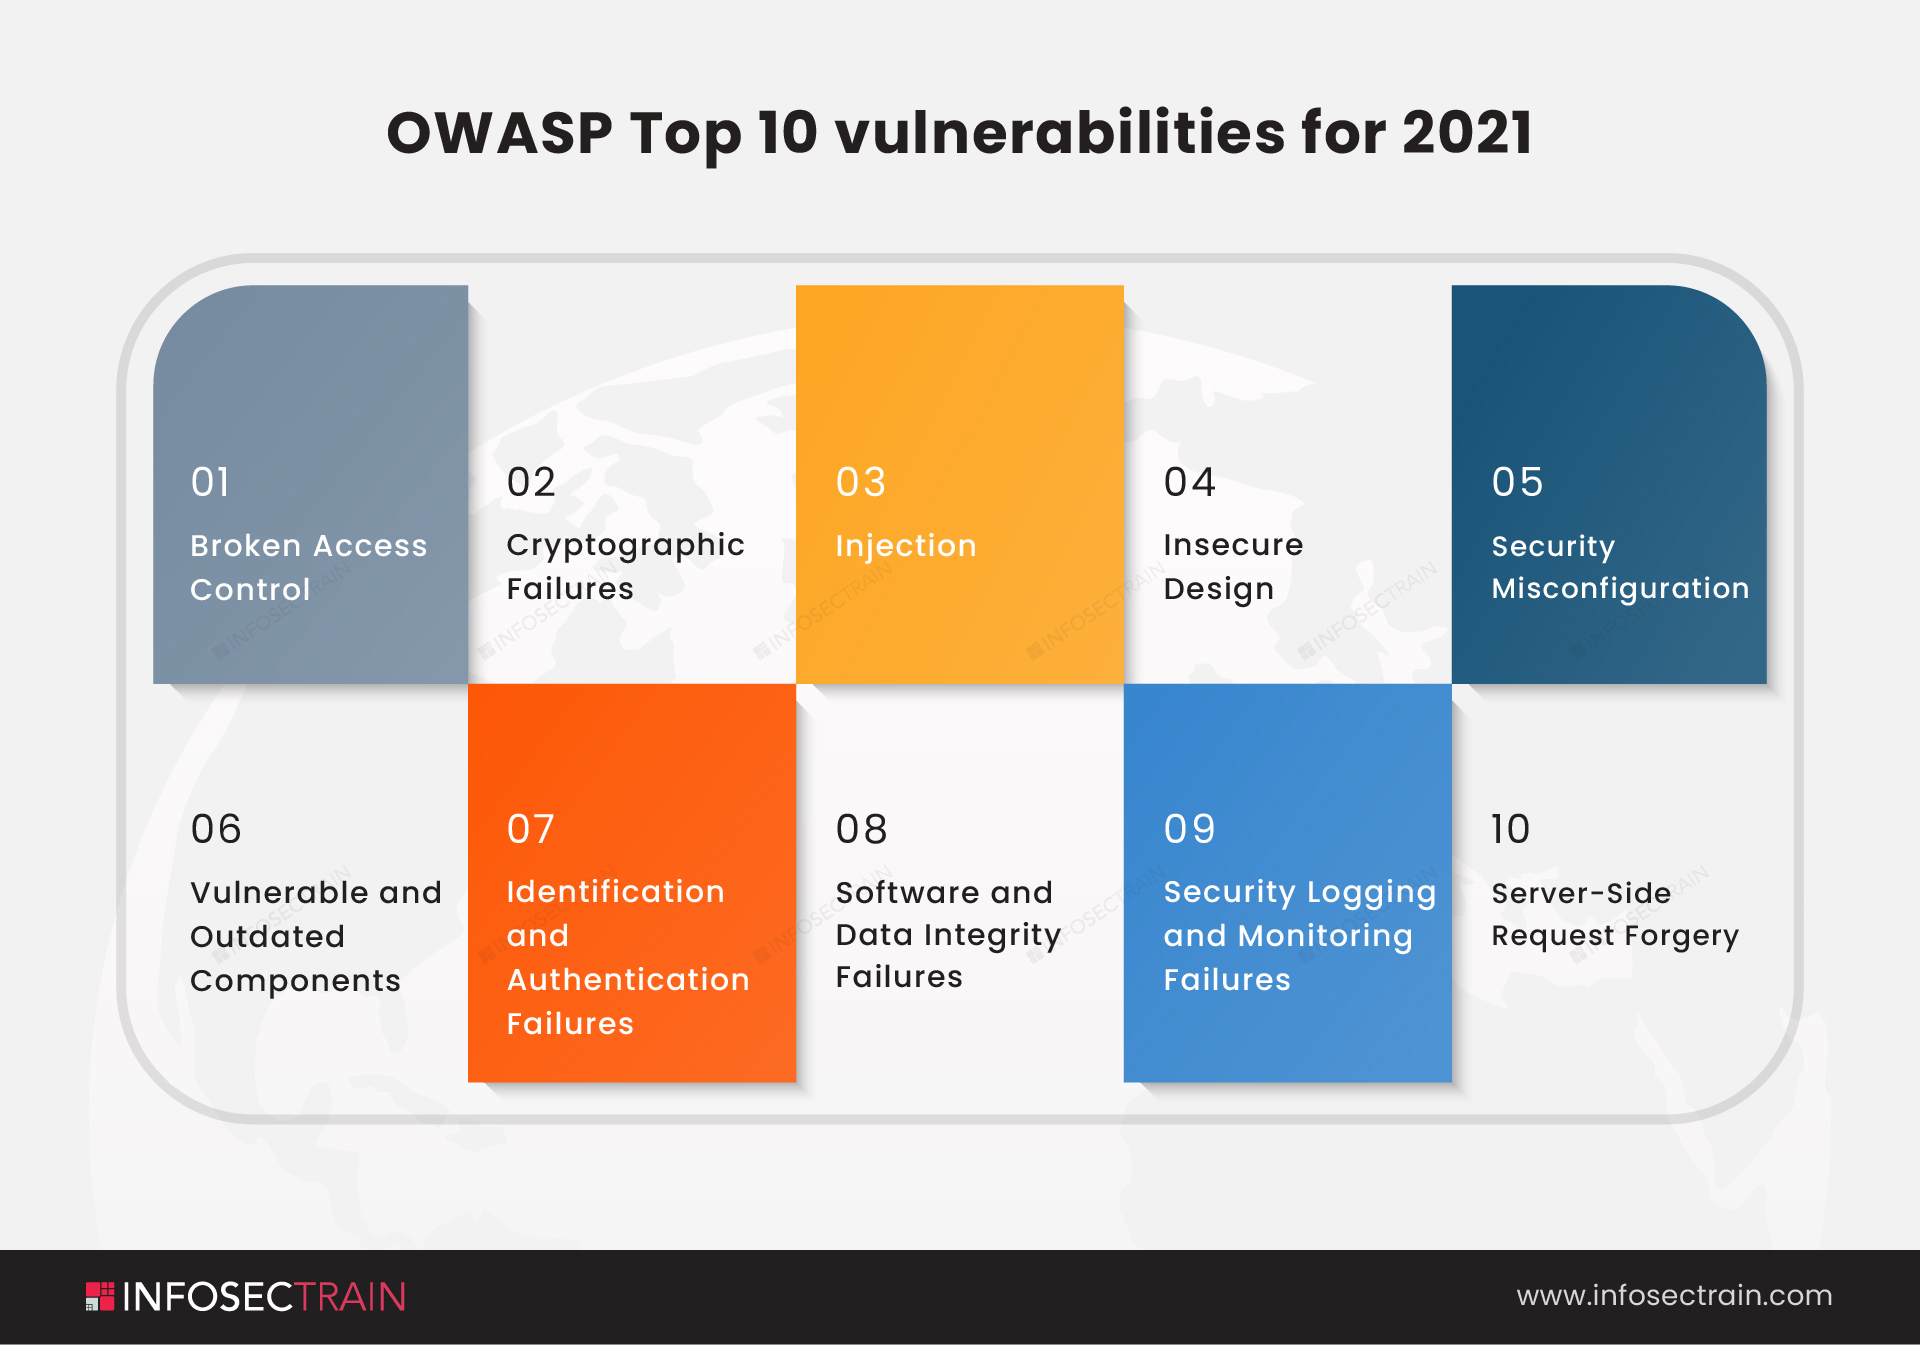 OWASP Top 10 vulnerabilities for 2021